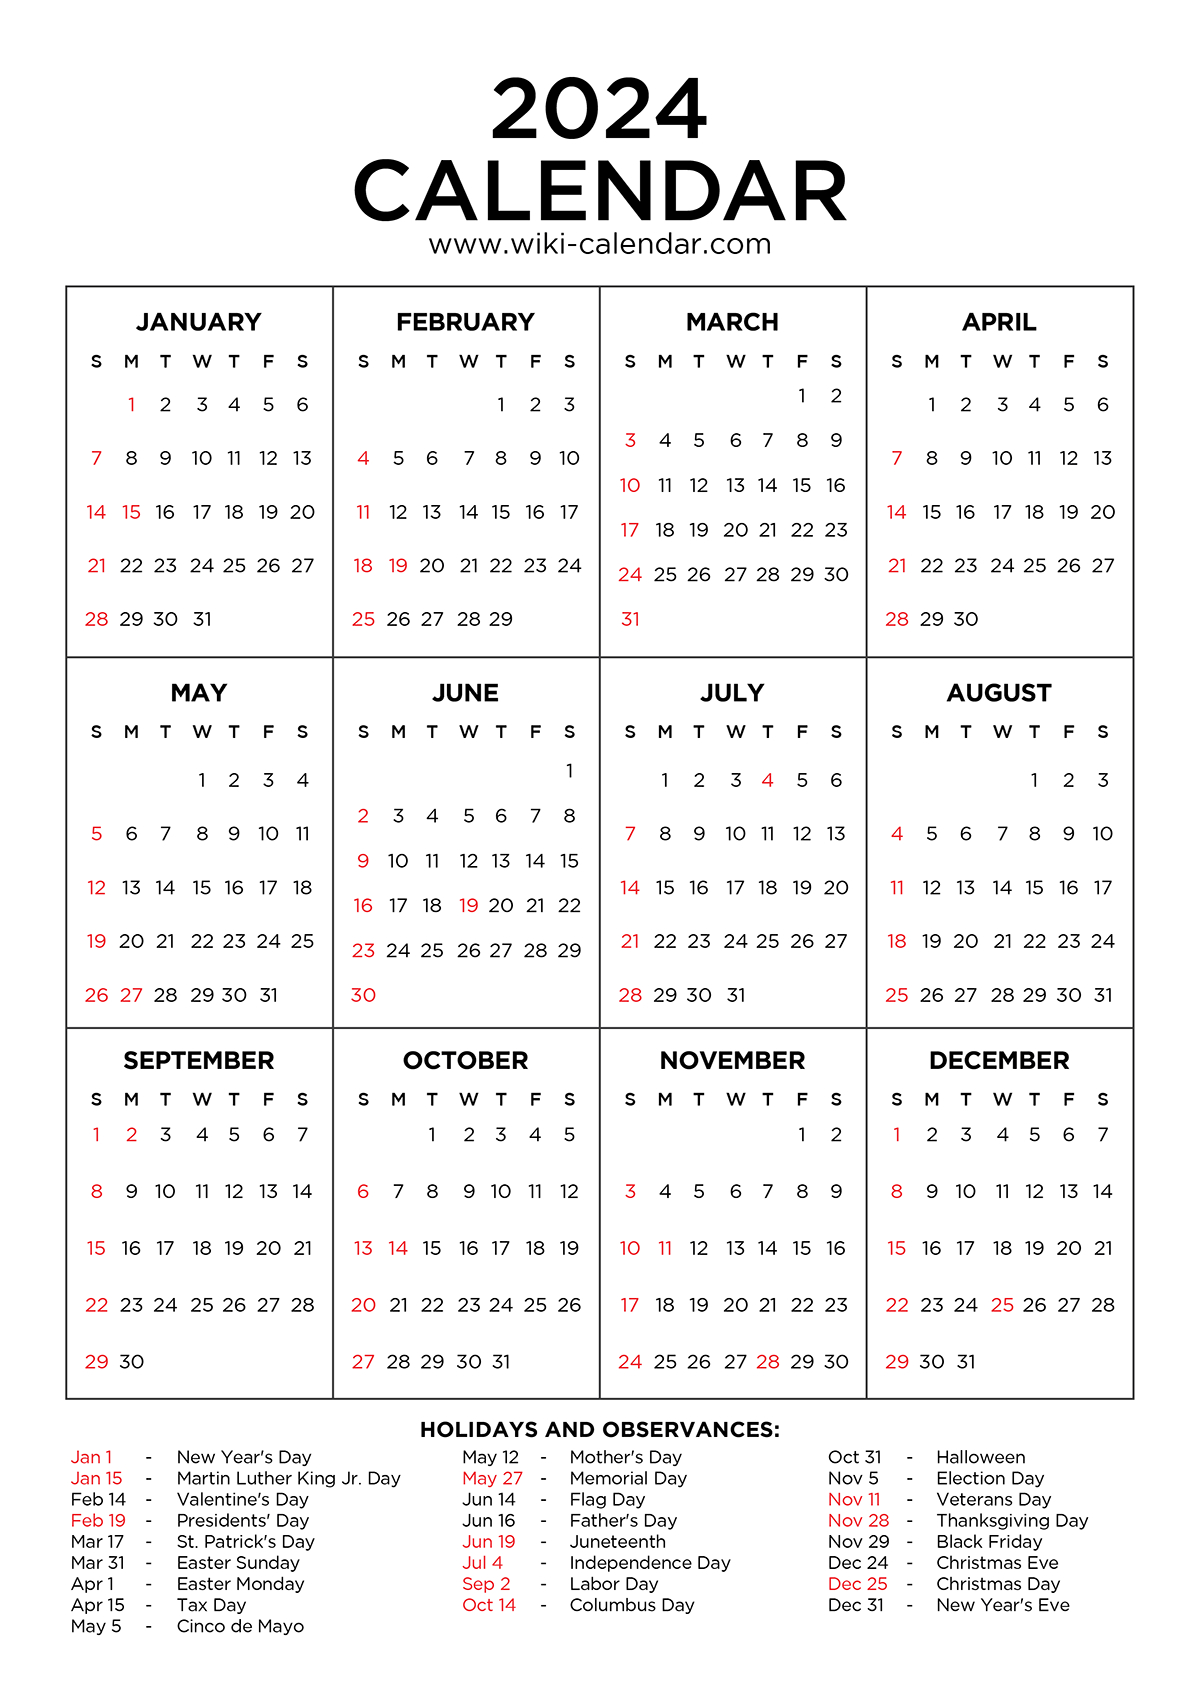 Year 2024 Calendar Printable With Holidays - Wiki Calendar | Printable Calendar 2024 With Holidays Free